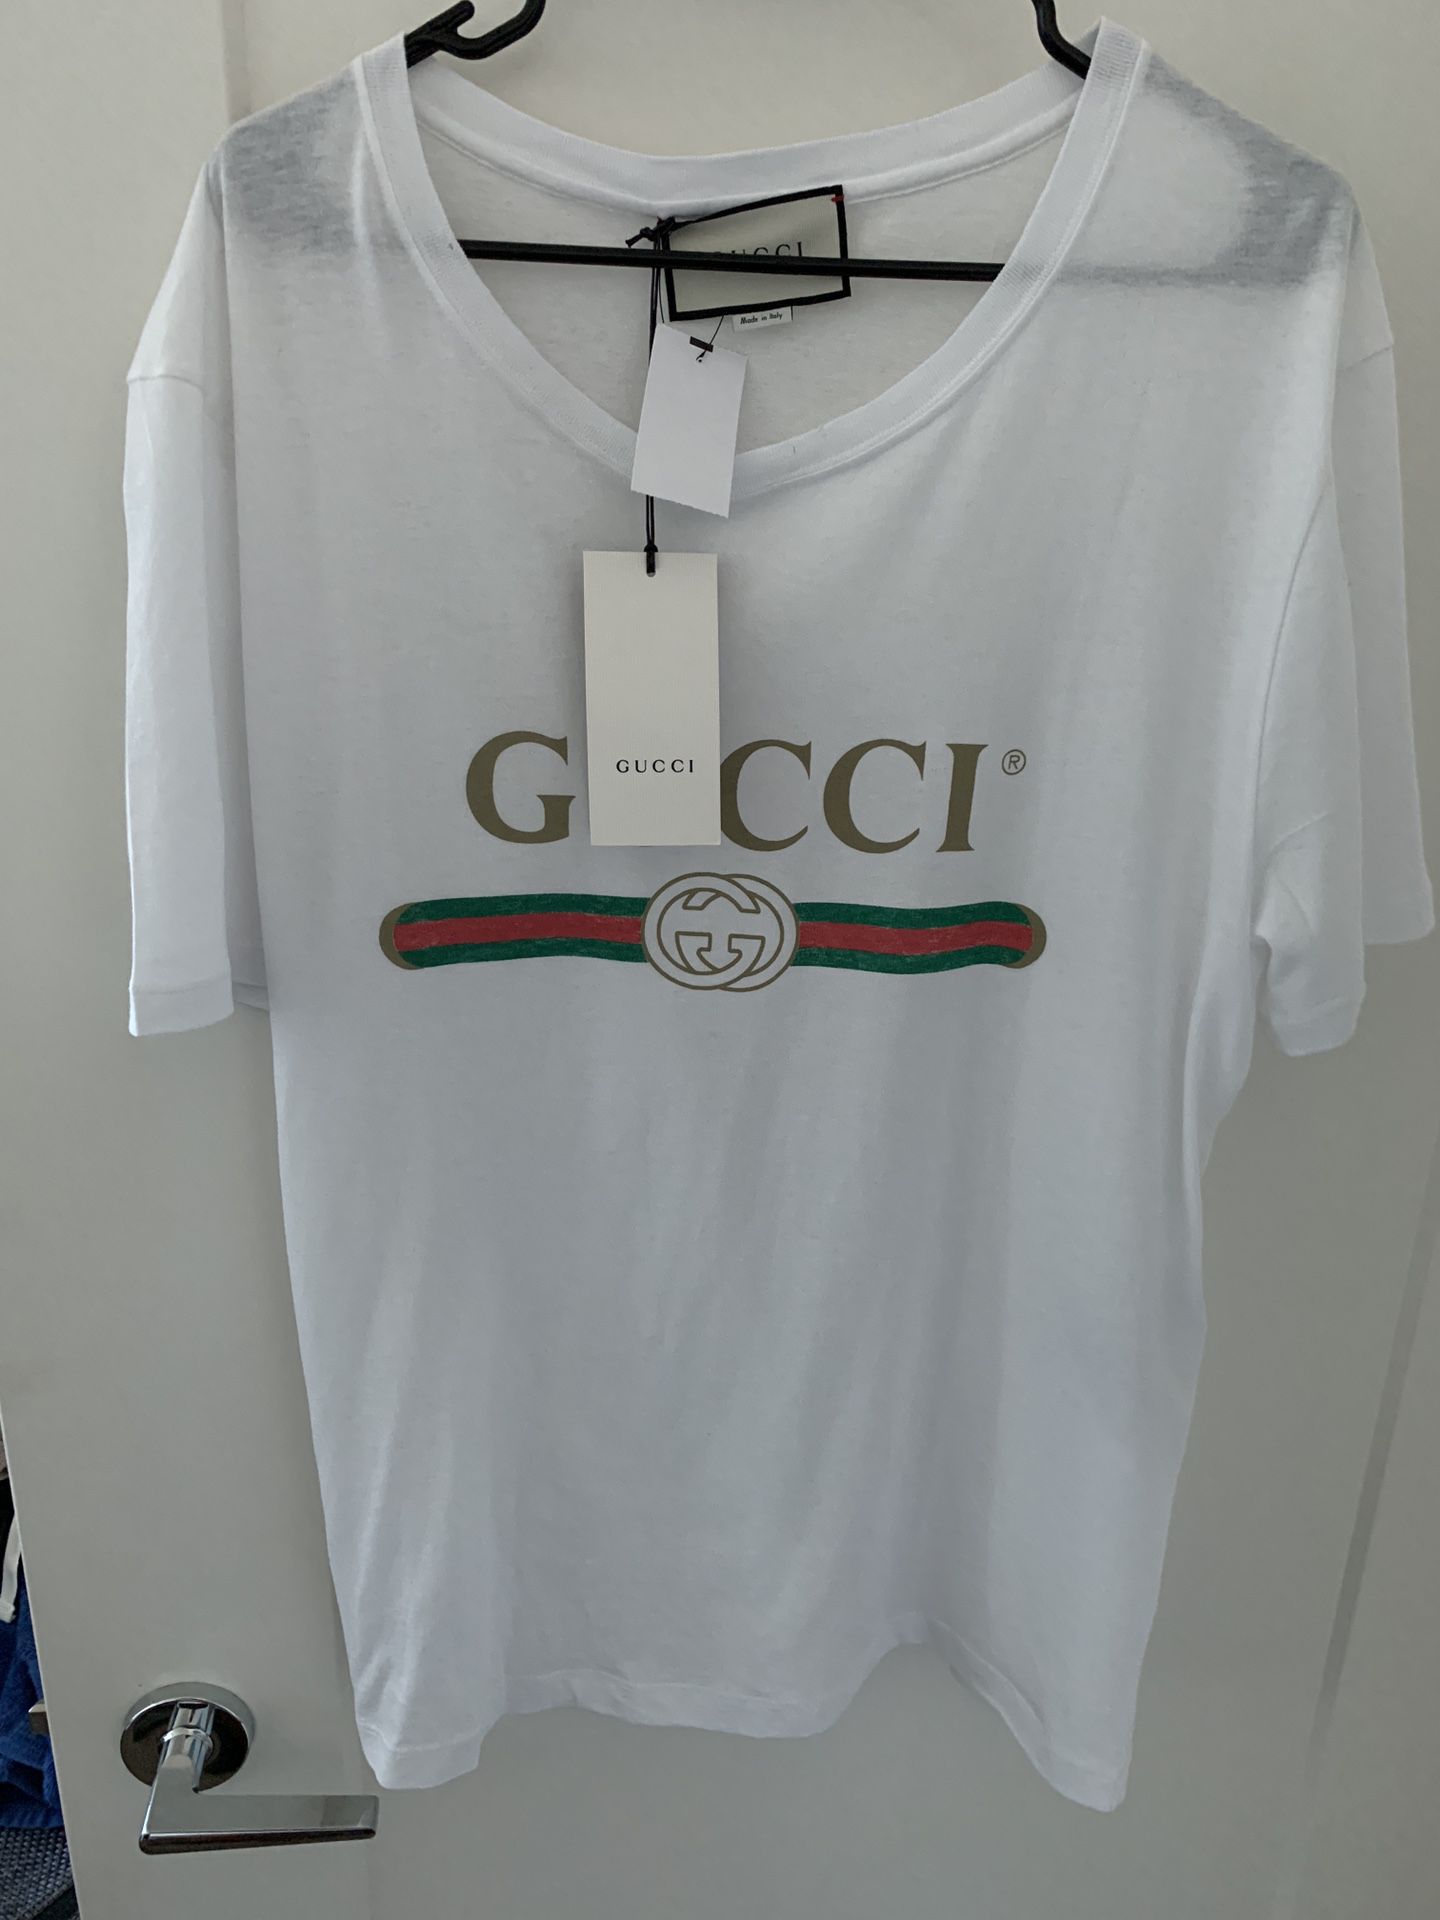 Gucci Men’s classic white shirt